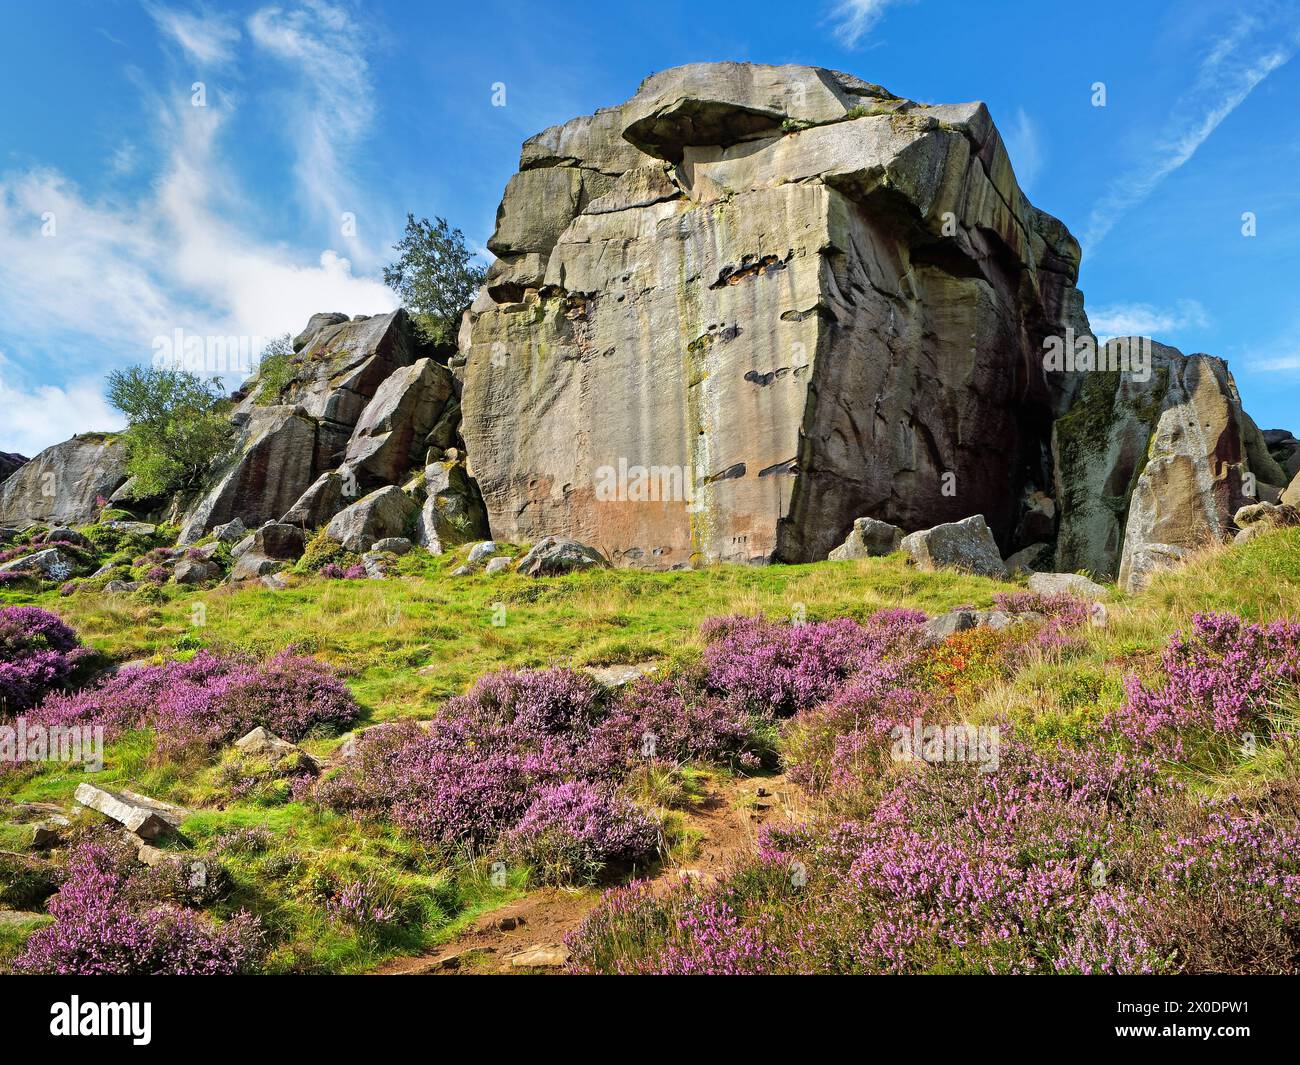 UK, West Yorkshire, Ilkley, Ilkley Moor Cow Rock Formation. Stock Photo